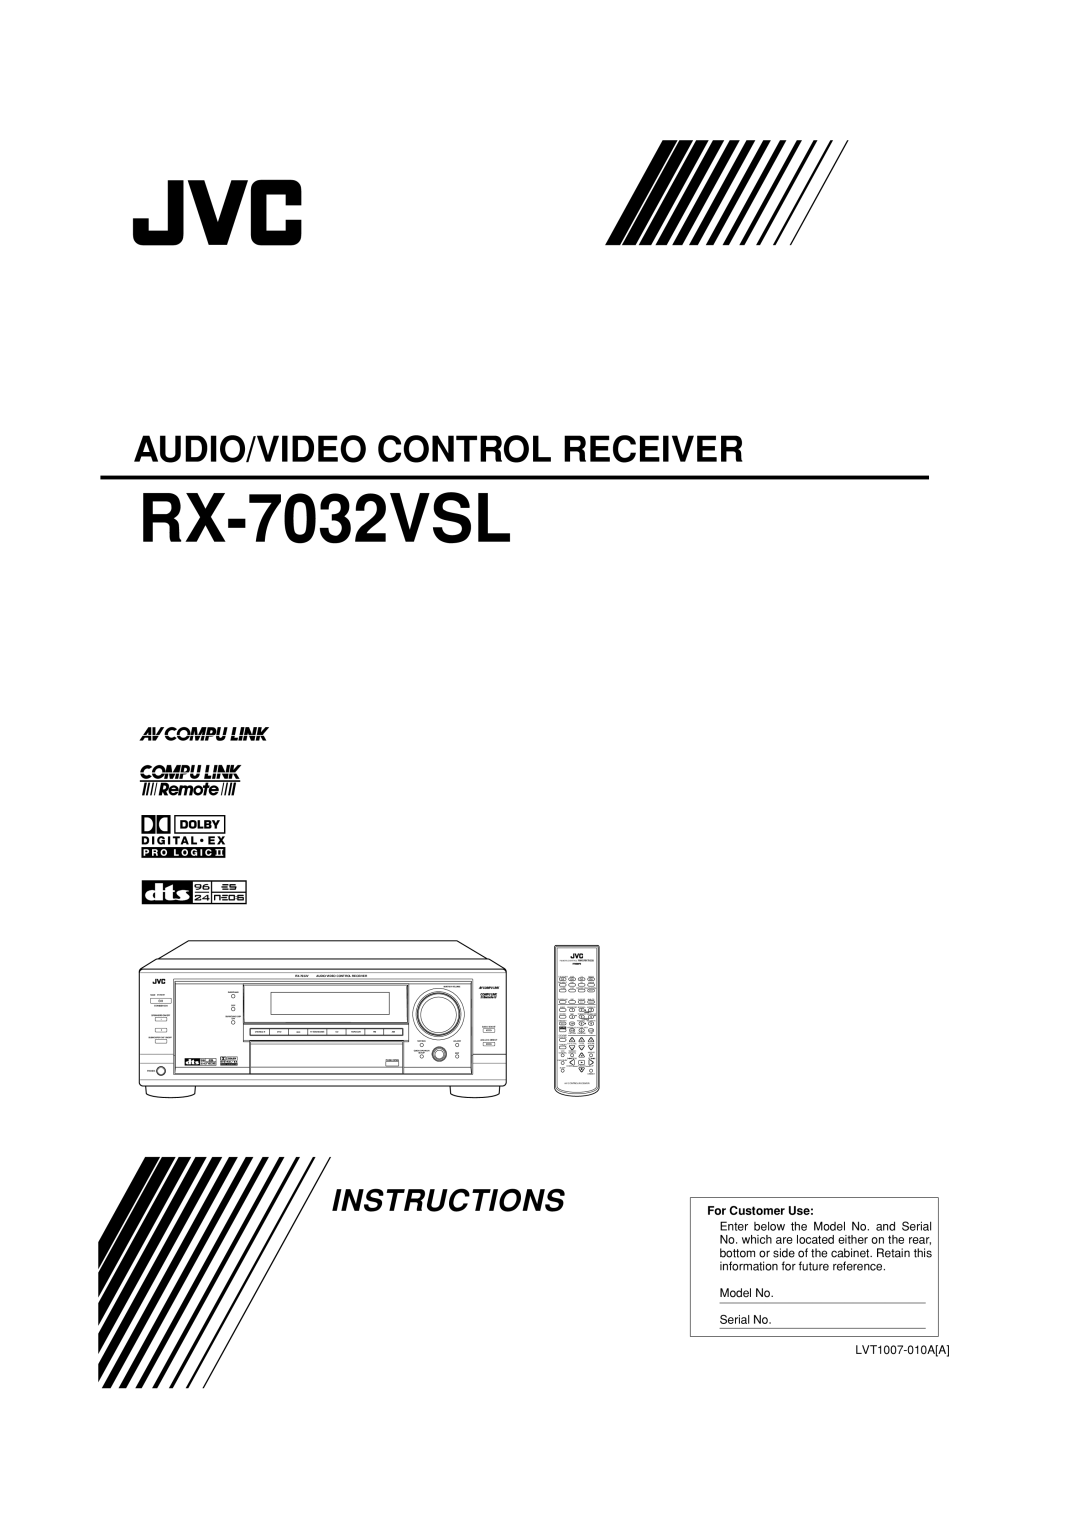 JVC LVT1007-010A[A] manual RX-7032VSL, Audio/Video Control Receiver, Instructions, Catv/Dbs Vcr, Master Volume, Tv/Dbs 